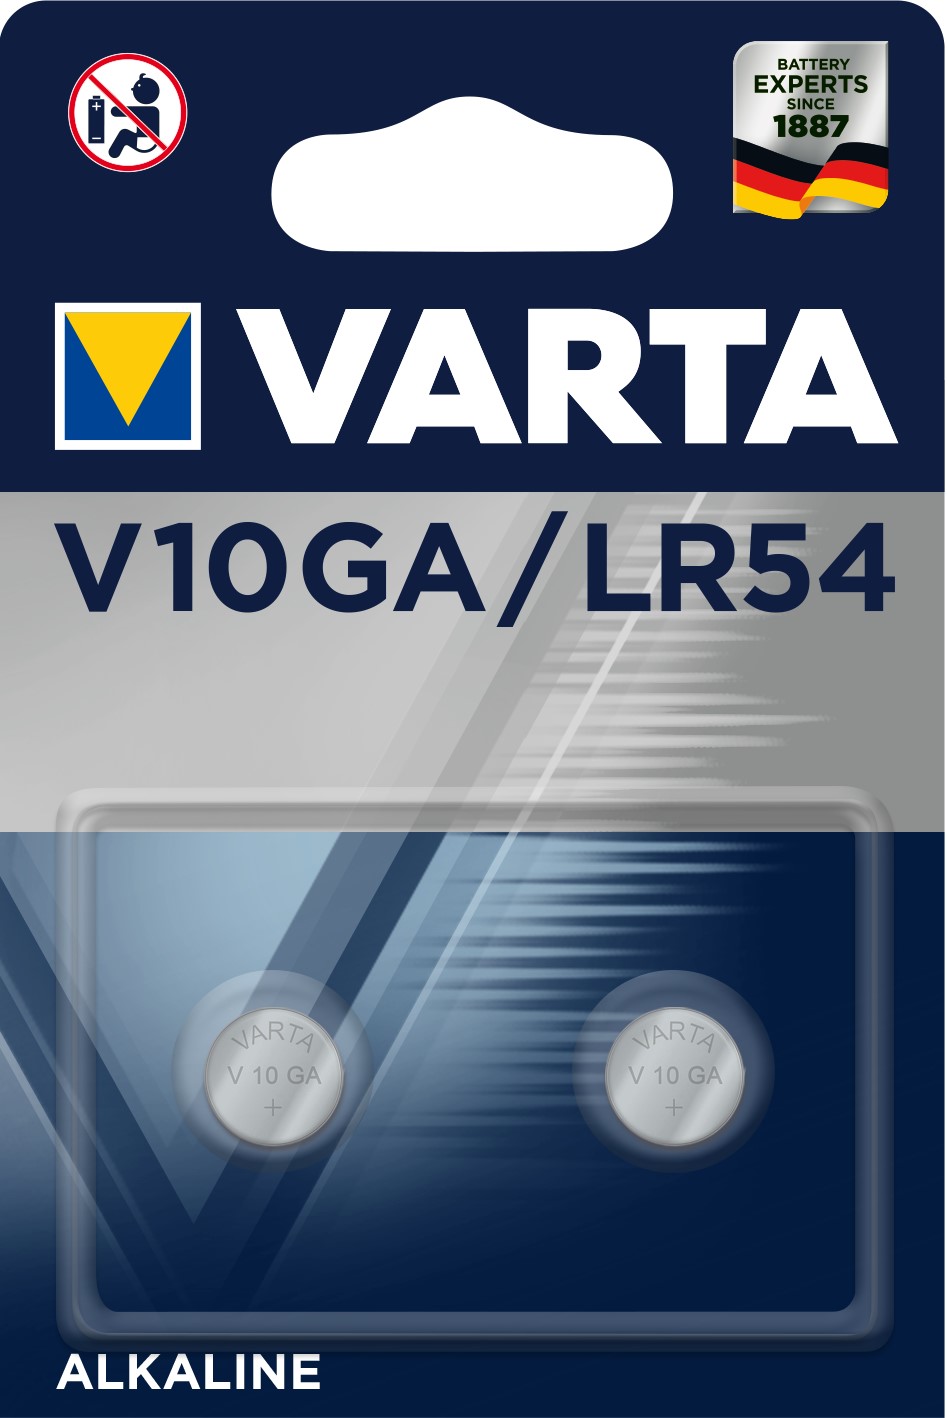 VARTA LR54/V10GA x2 Pile alcaline 1,5V VARTA